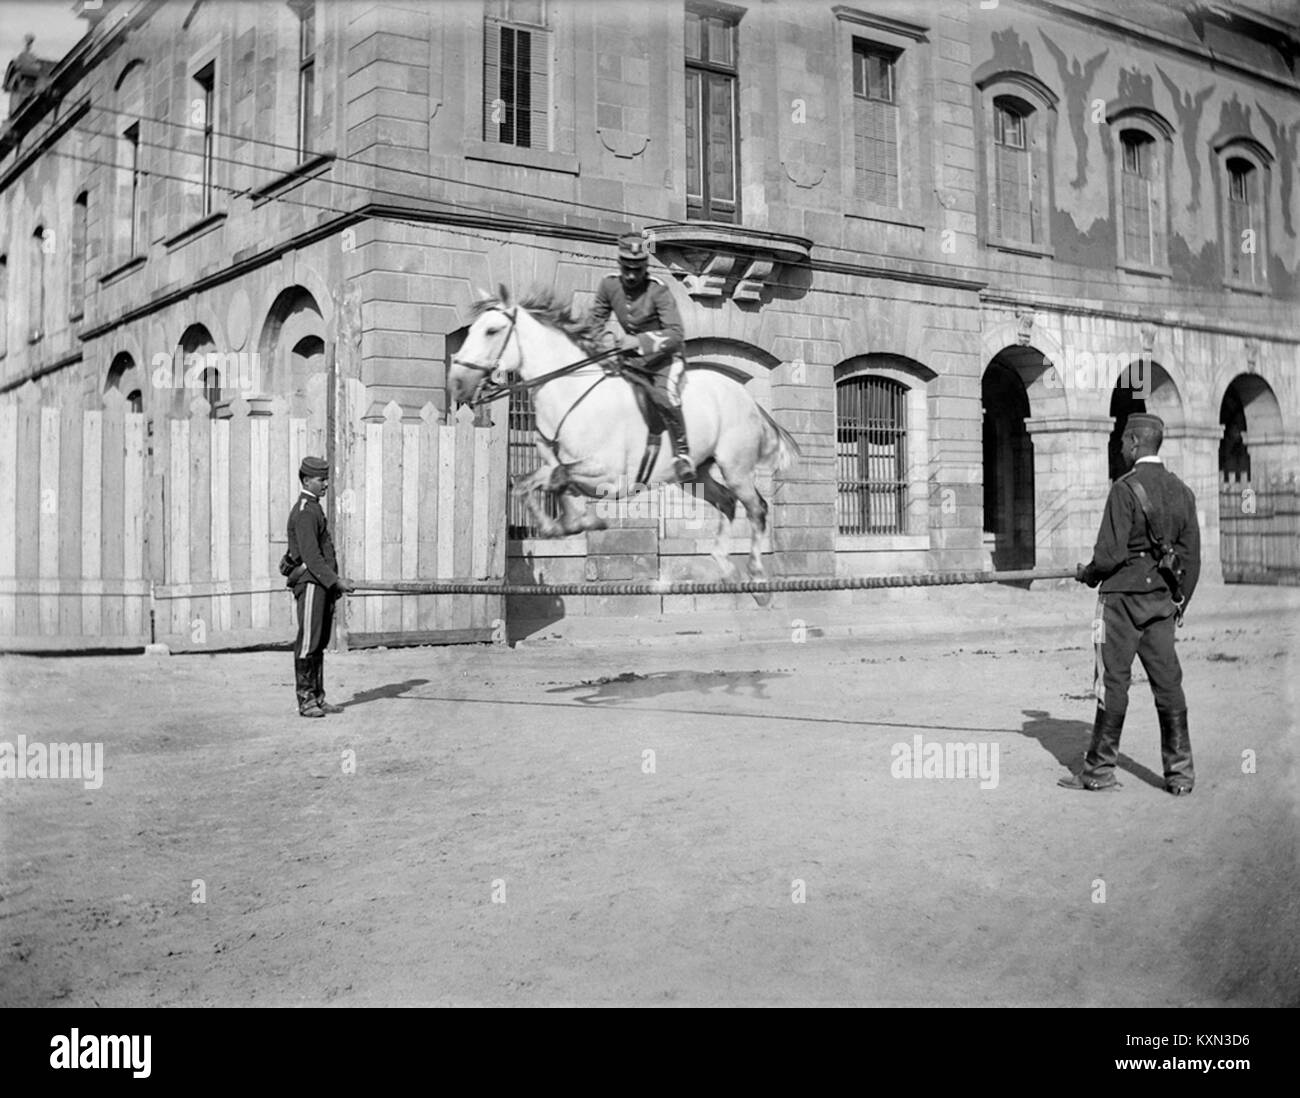 Baldomer Gili Roig. Stimmt Hípic Internacional de Barcelona (Pati d'Armes de la Ciutadella), 1905 - 1910 Stockfoto